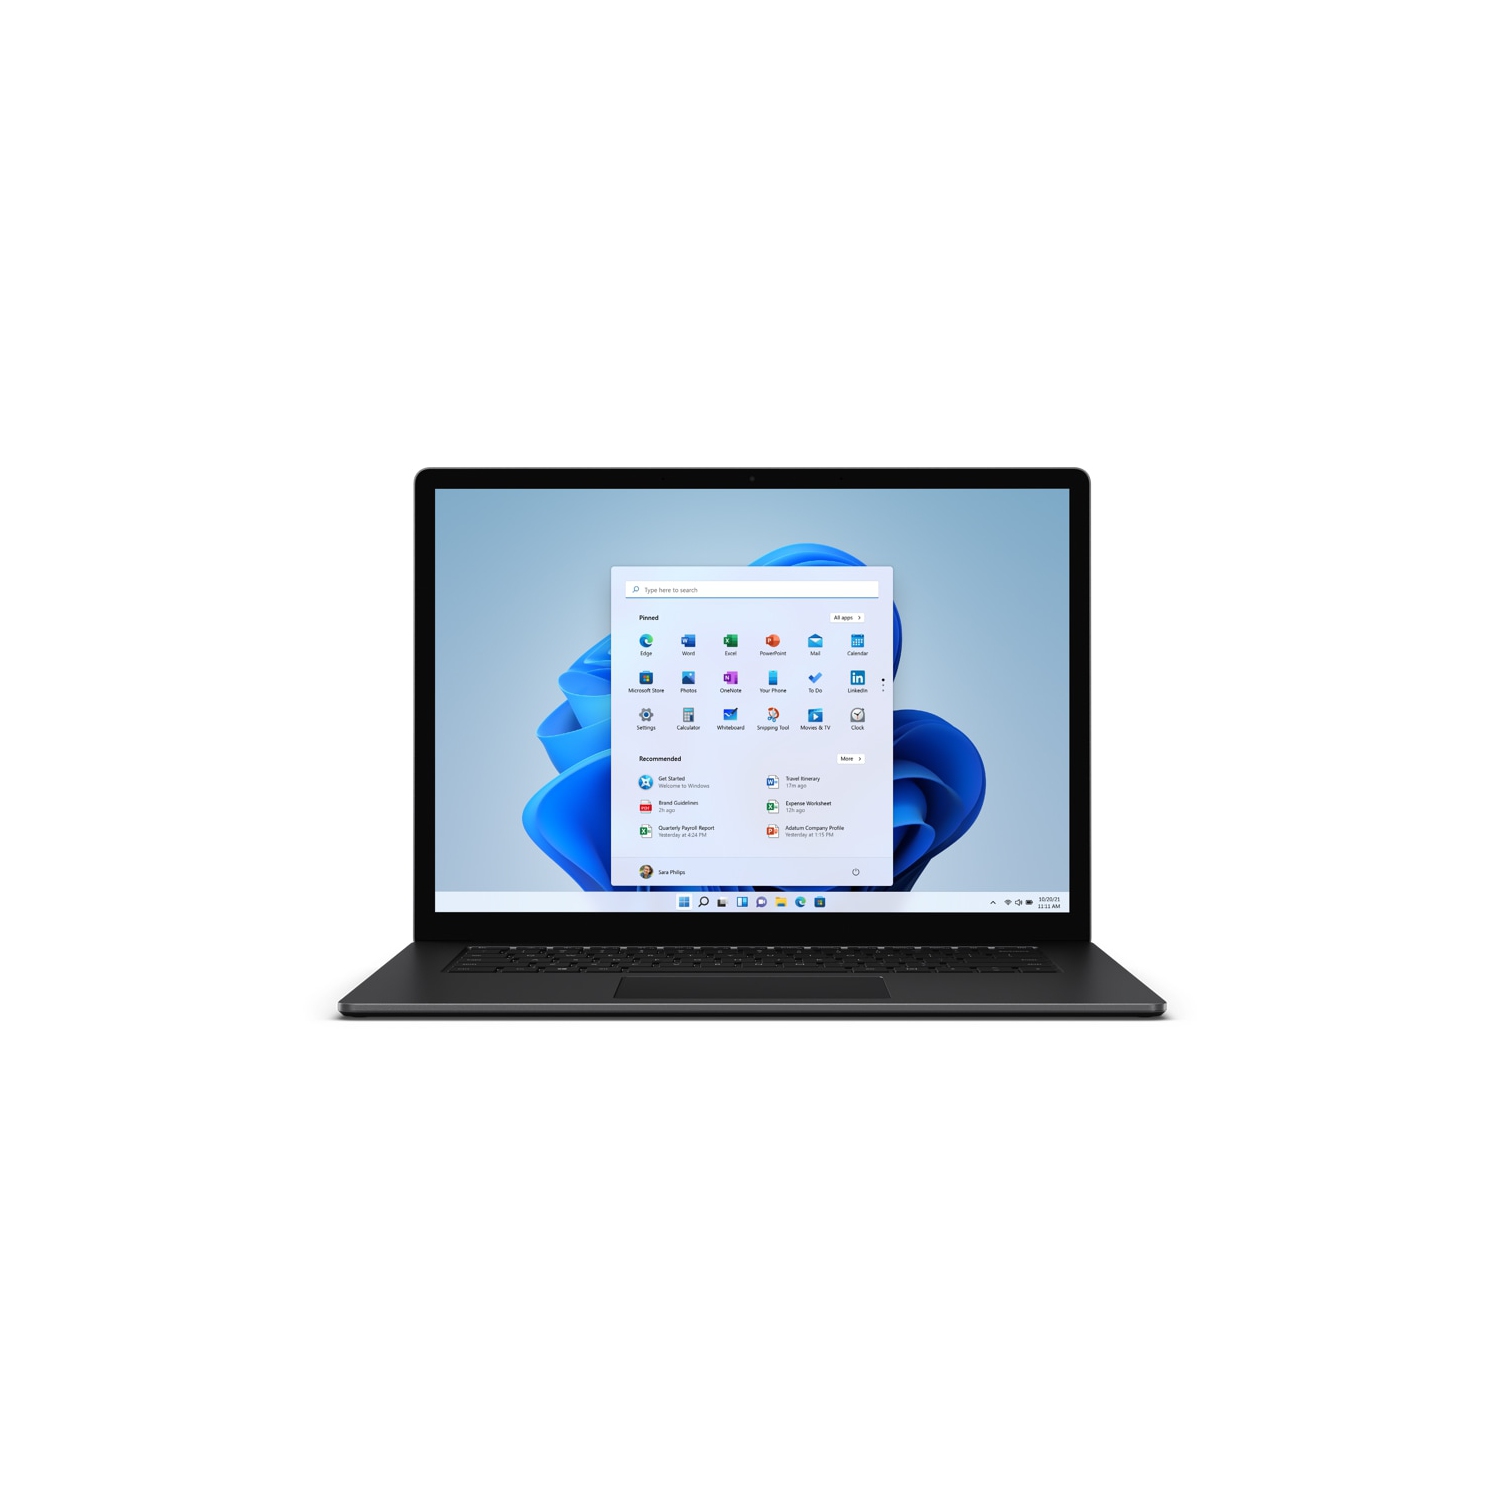 Refurbished (Excellent) Microsoft Surface Laptop 4 - Intel Core i5-1135G7/8GB LPDDR4x/512GB SSD/Windows 11 Home/ 13.5" Screen - Black